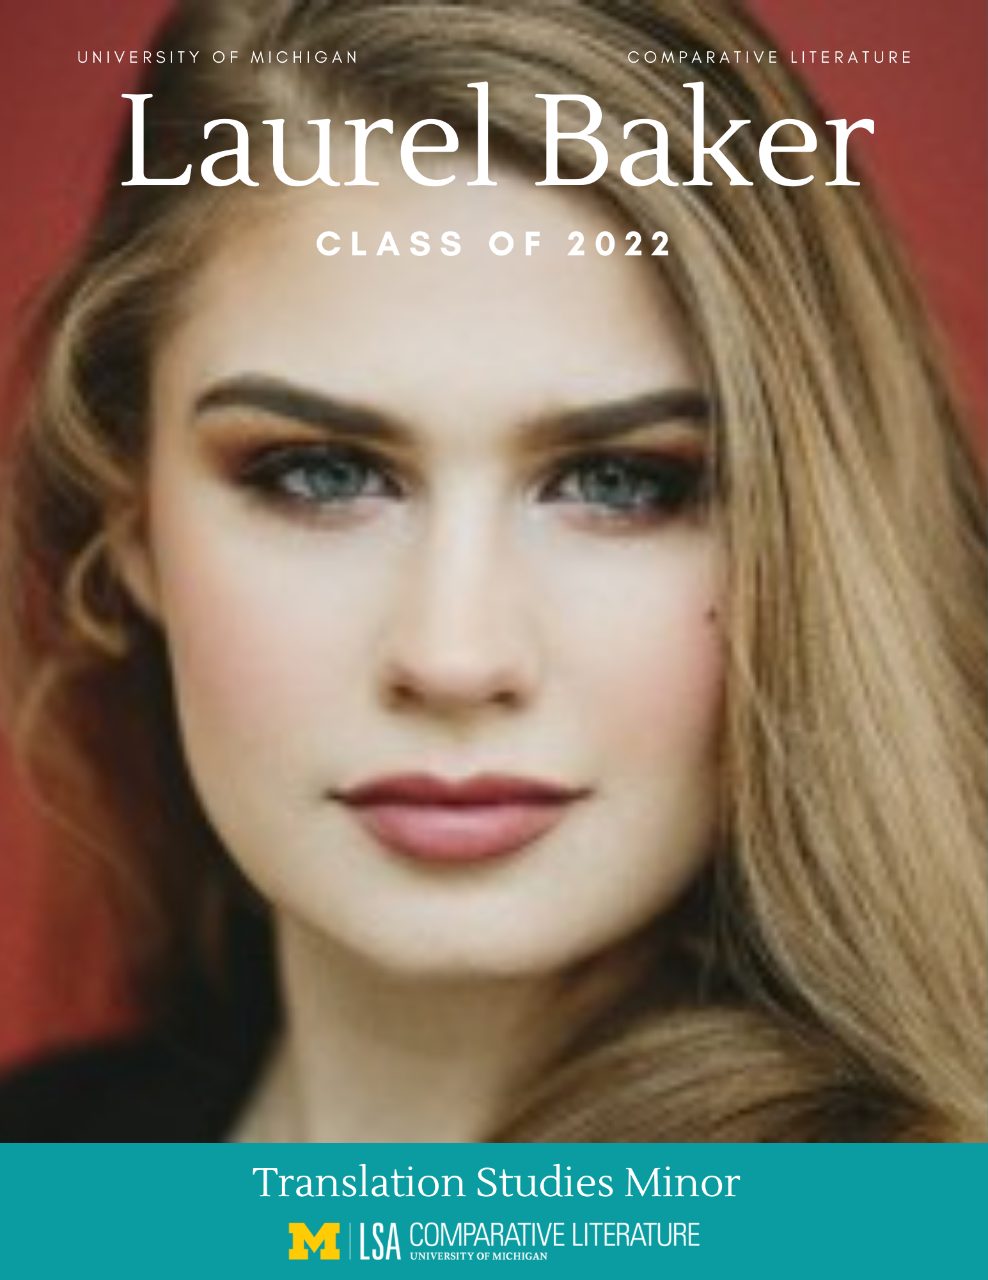 Headshot of Laurel Baker with text, “University of Michigan, Comparative Literature, Laurel Baker Class of 2022. Translation Studies Minor”